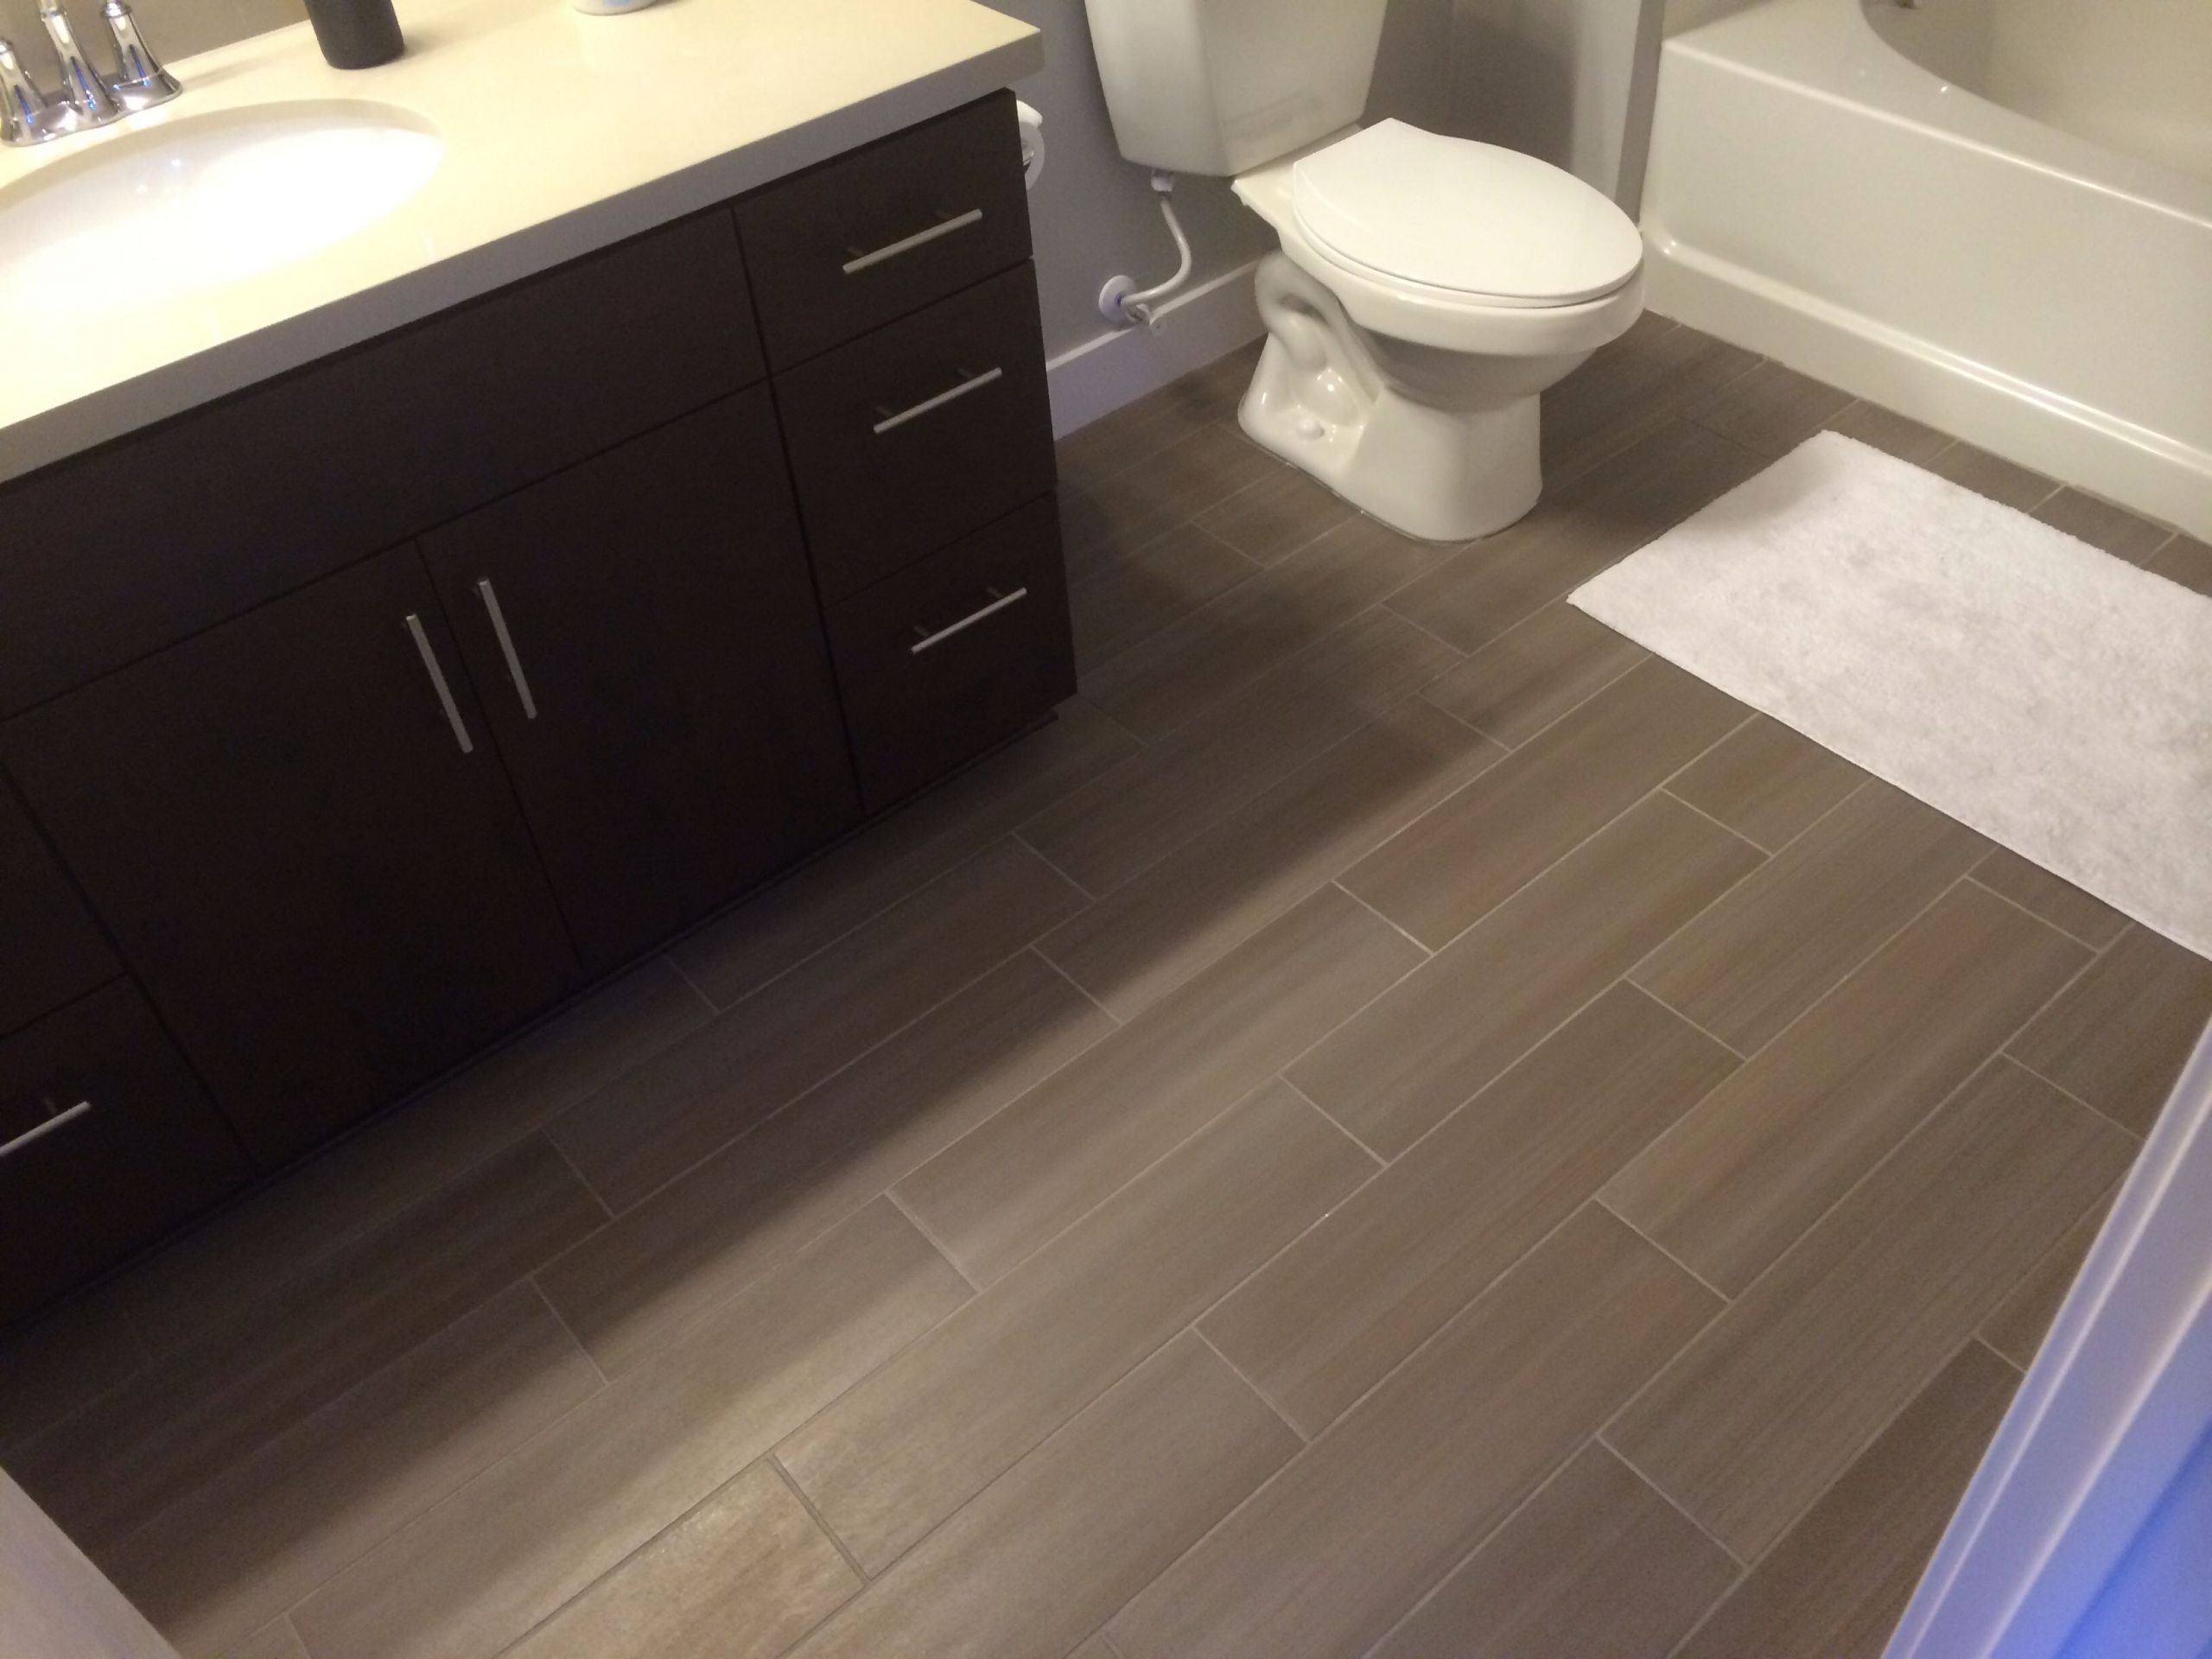 Best Flooring For Small Bathroom
 The 25 best Bathroom flooring ideas on Pinterest